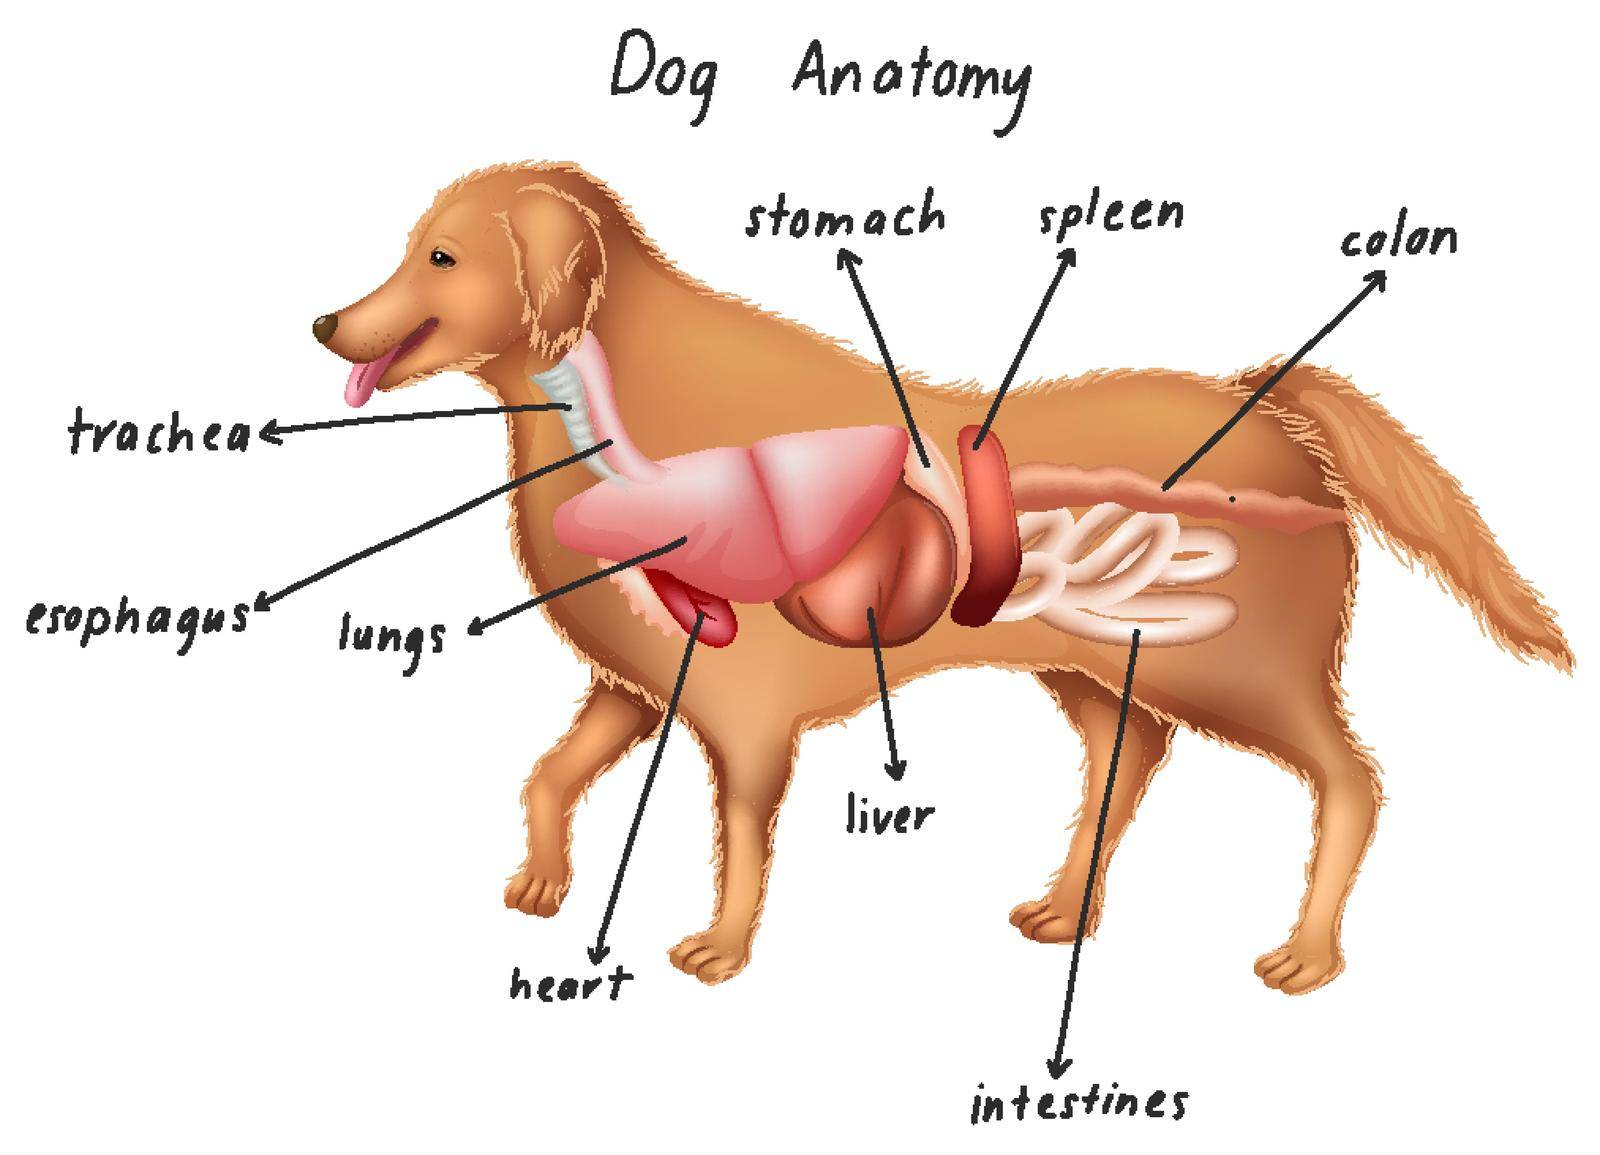 Anatomy of a dog illustration